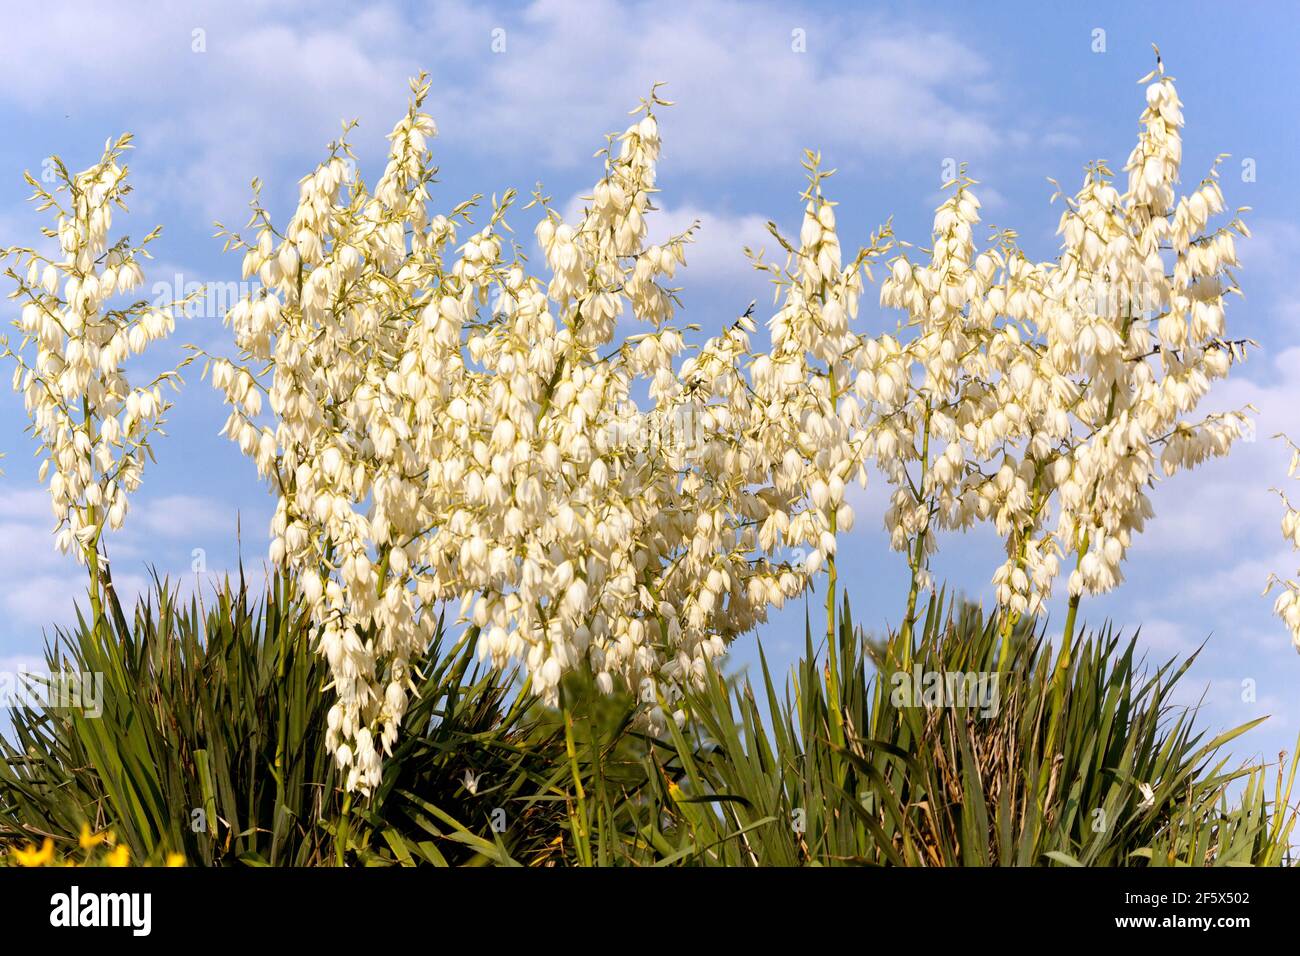 Yucca plant blossoms Stock Photo